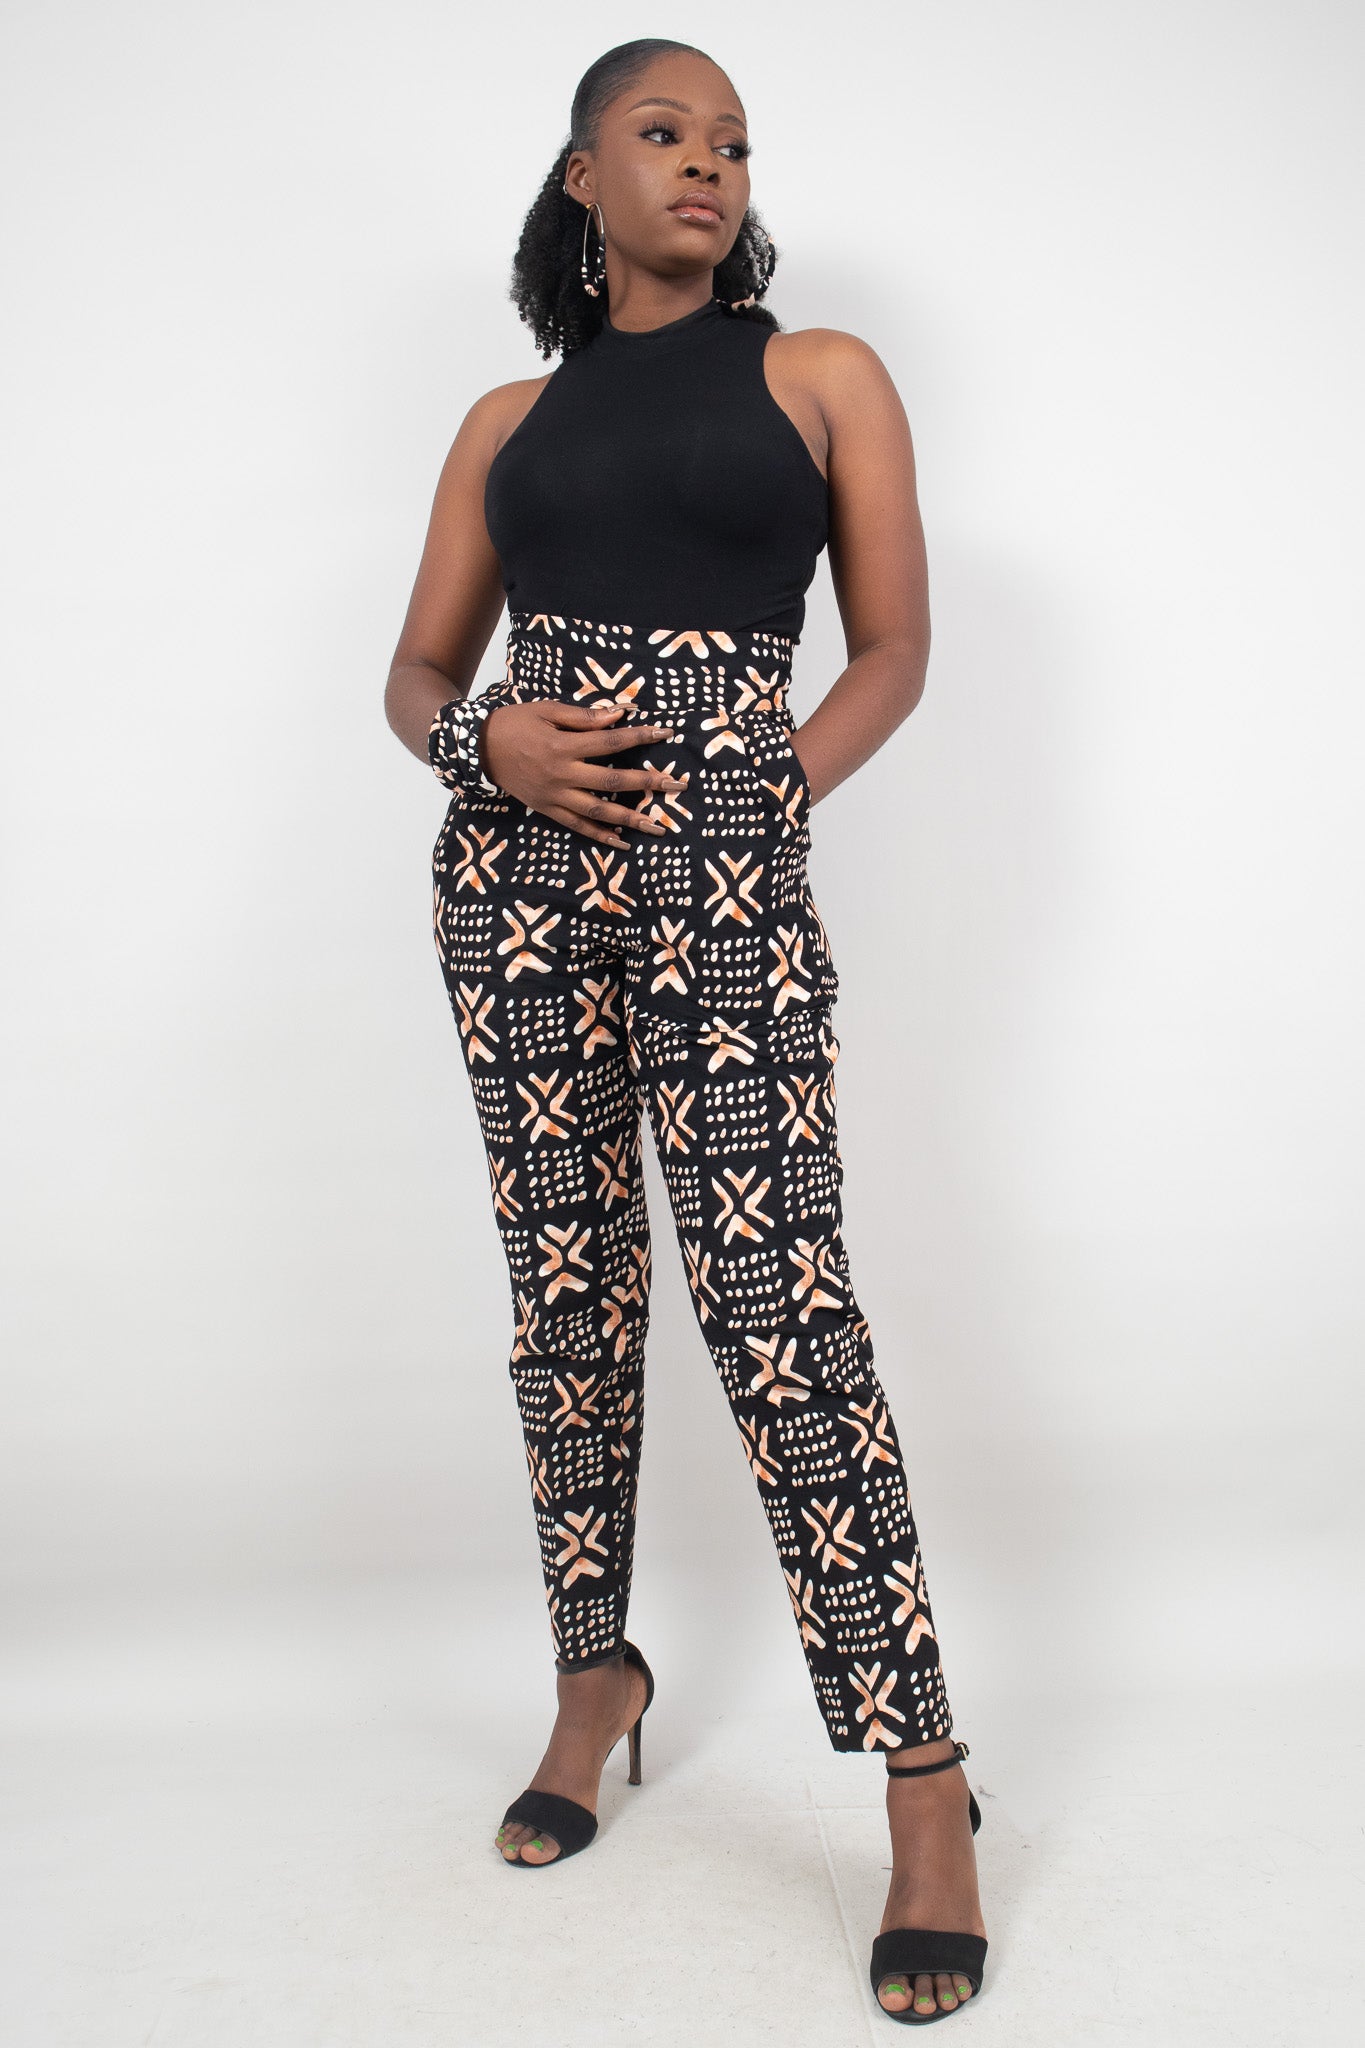 Jioni African Print Ankara Trousers – Pink, Black